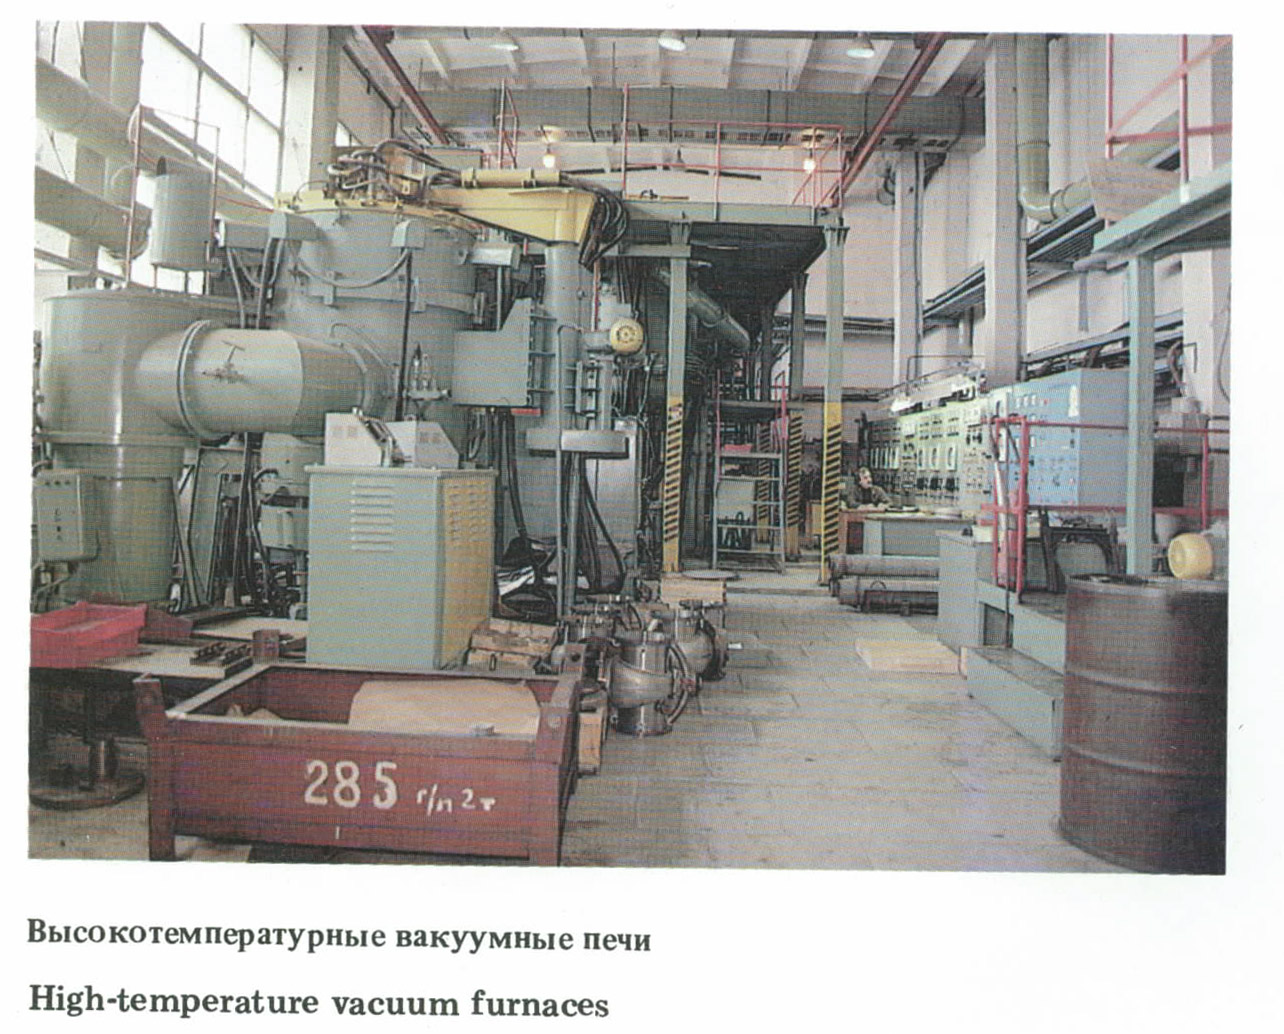 High-temperature vacuum furnaces Baltijets, Narva